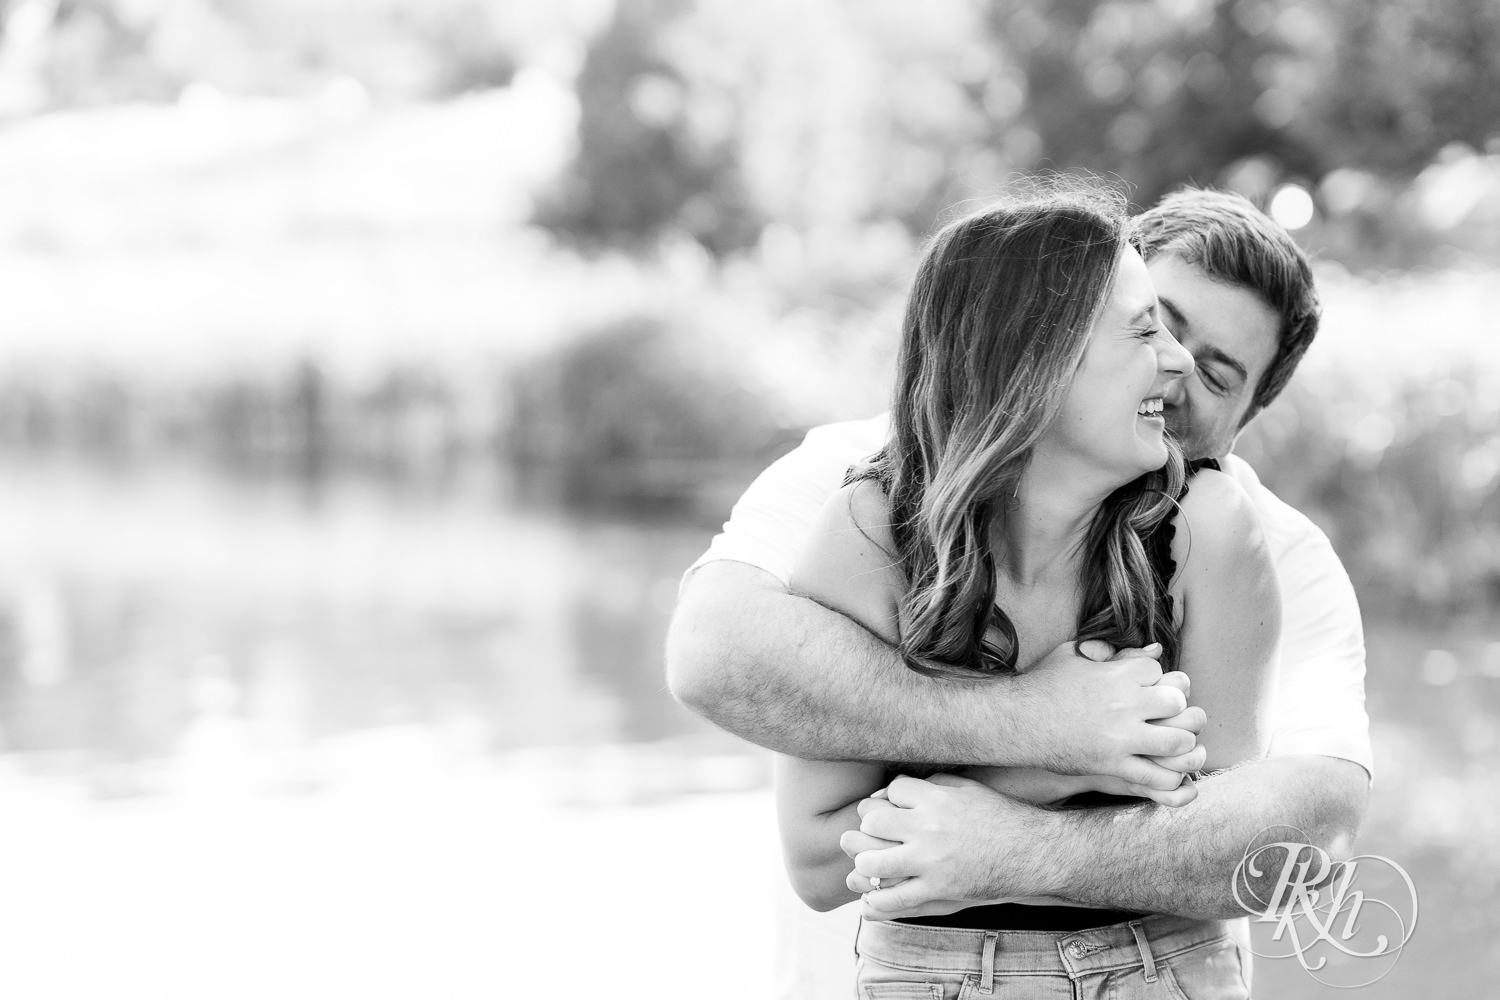 Man and woman laugh during engagement photography at Centennial Lakes Park in Edina, Minnesota.